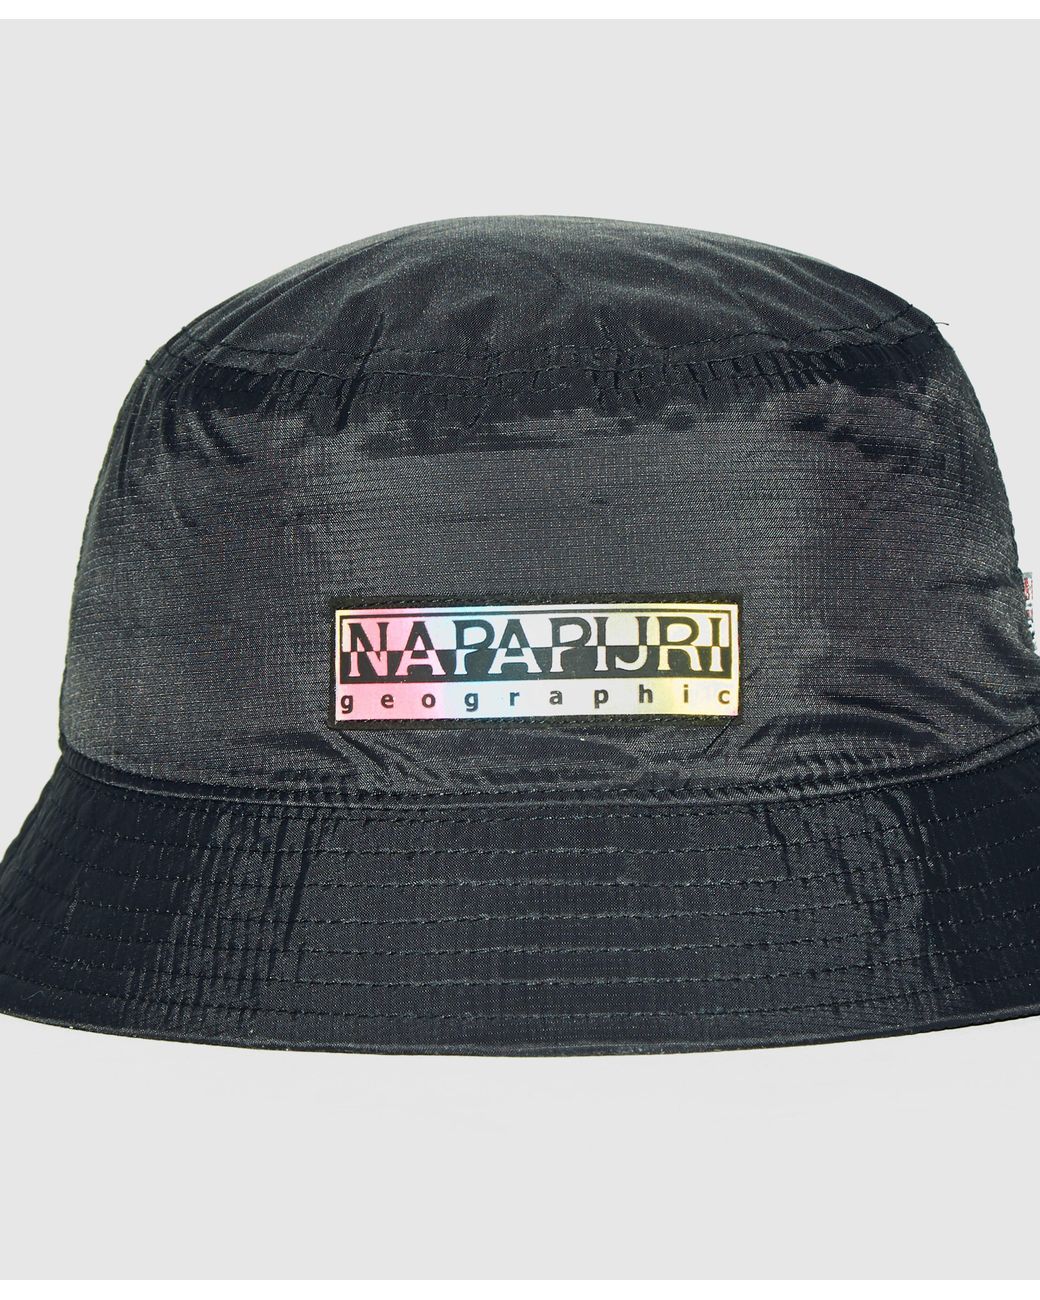 Napapijri French Bucket Hat in Black for Men | Lyst